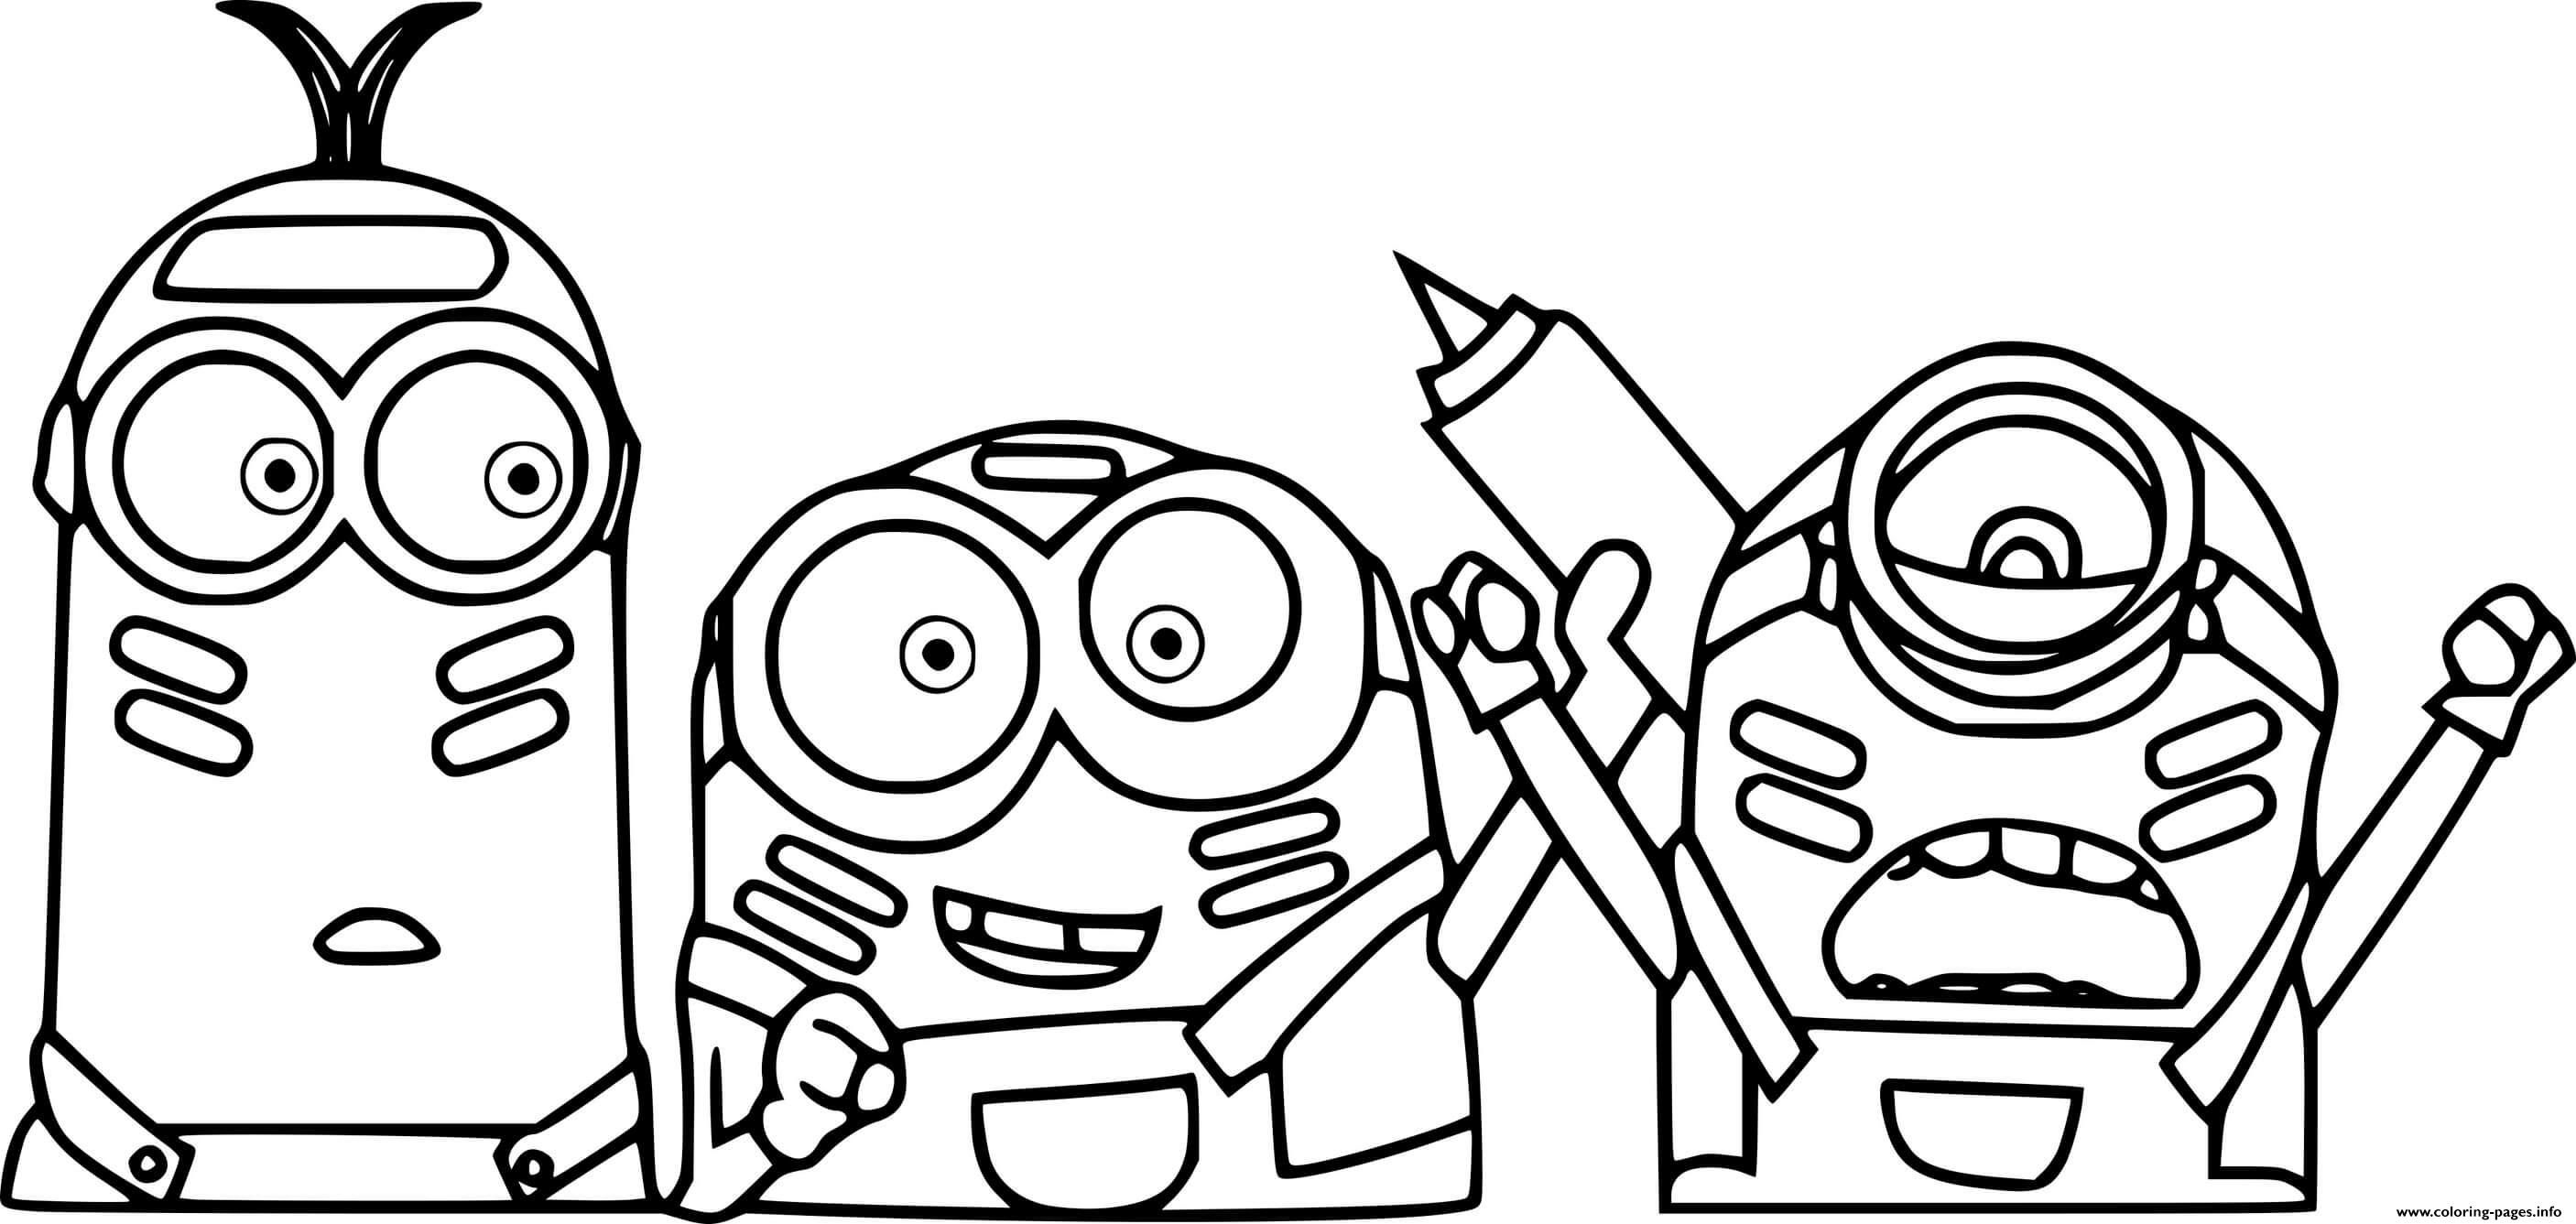 Three Minions coloring